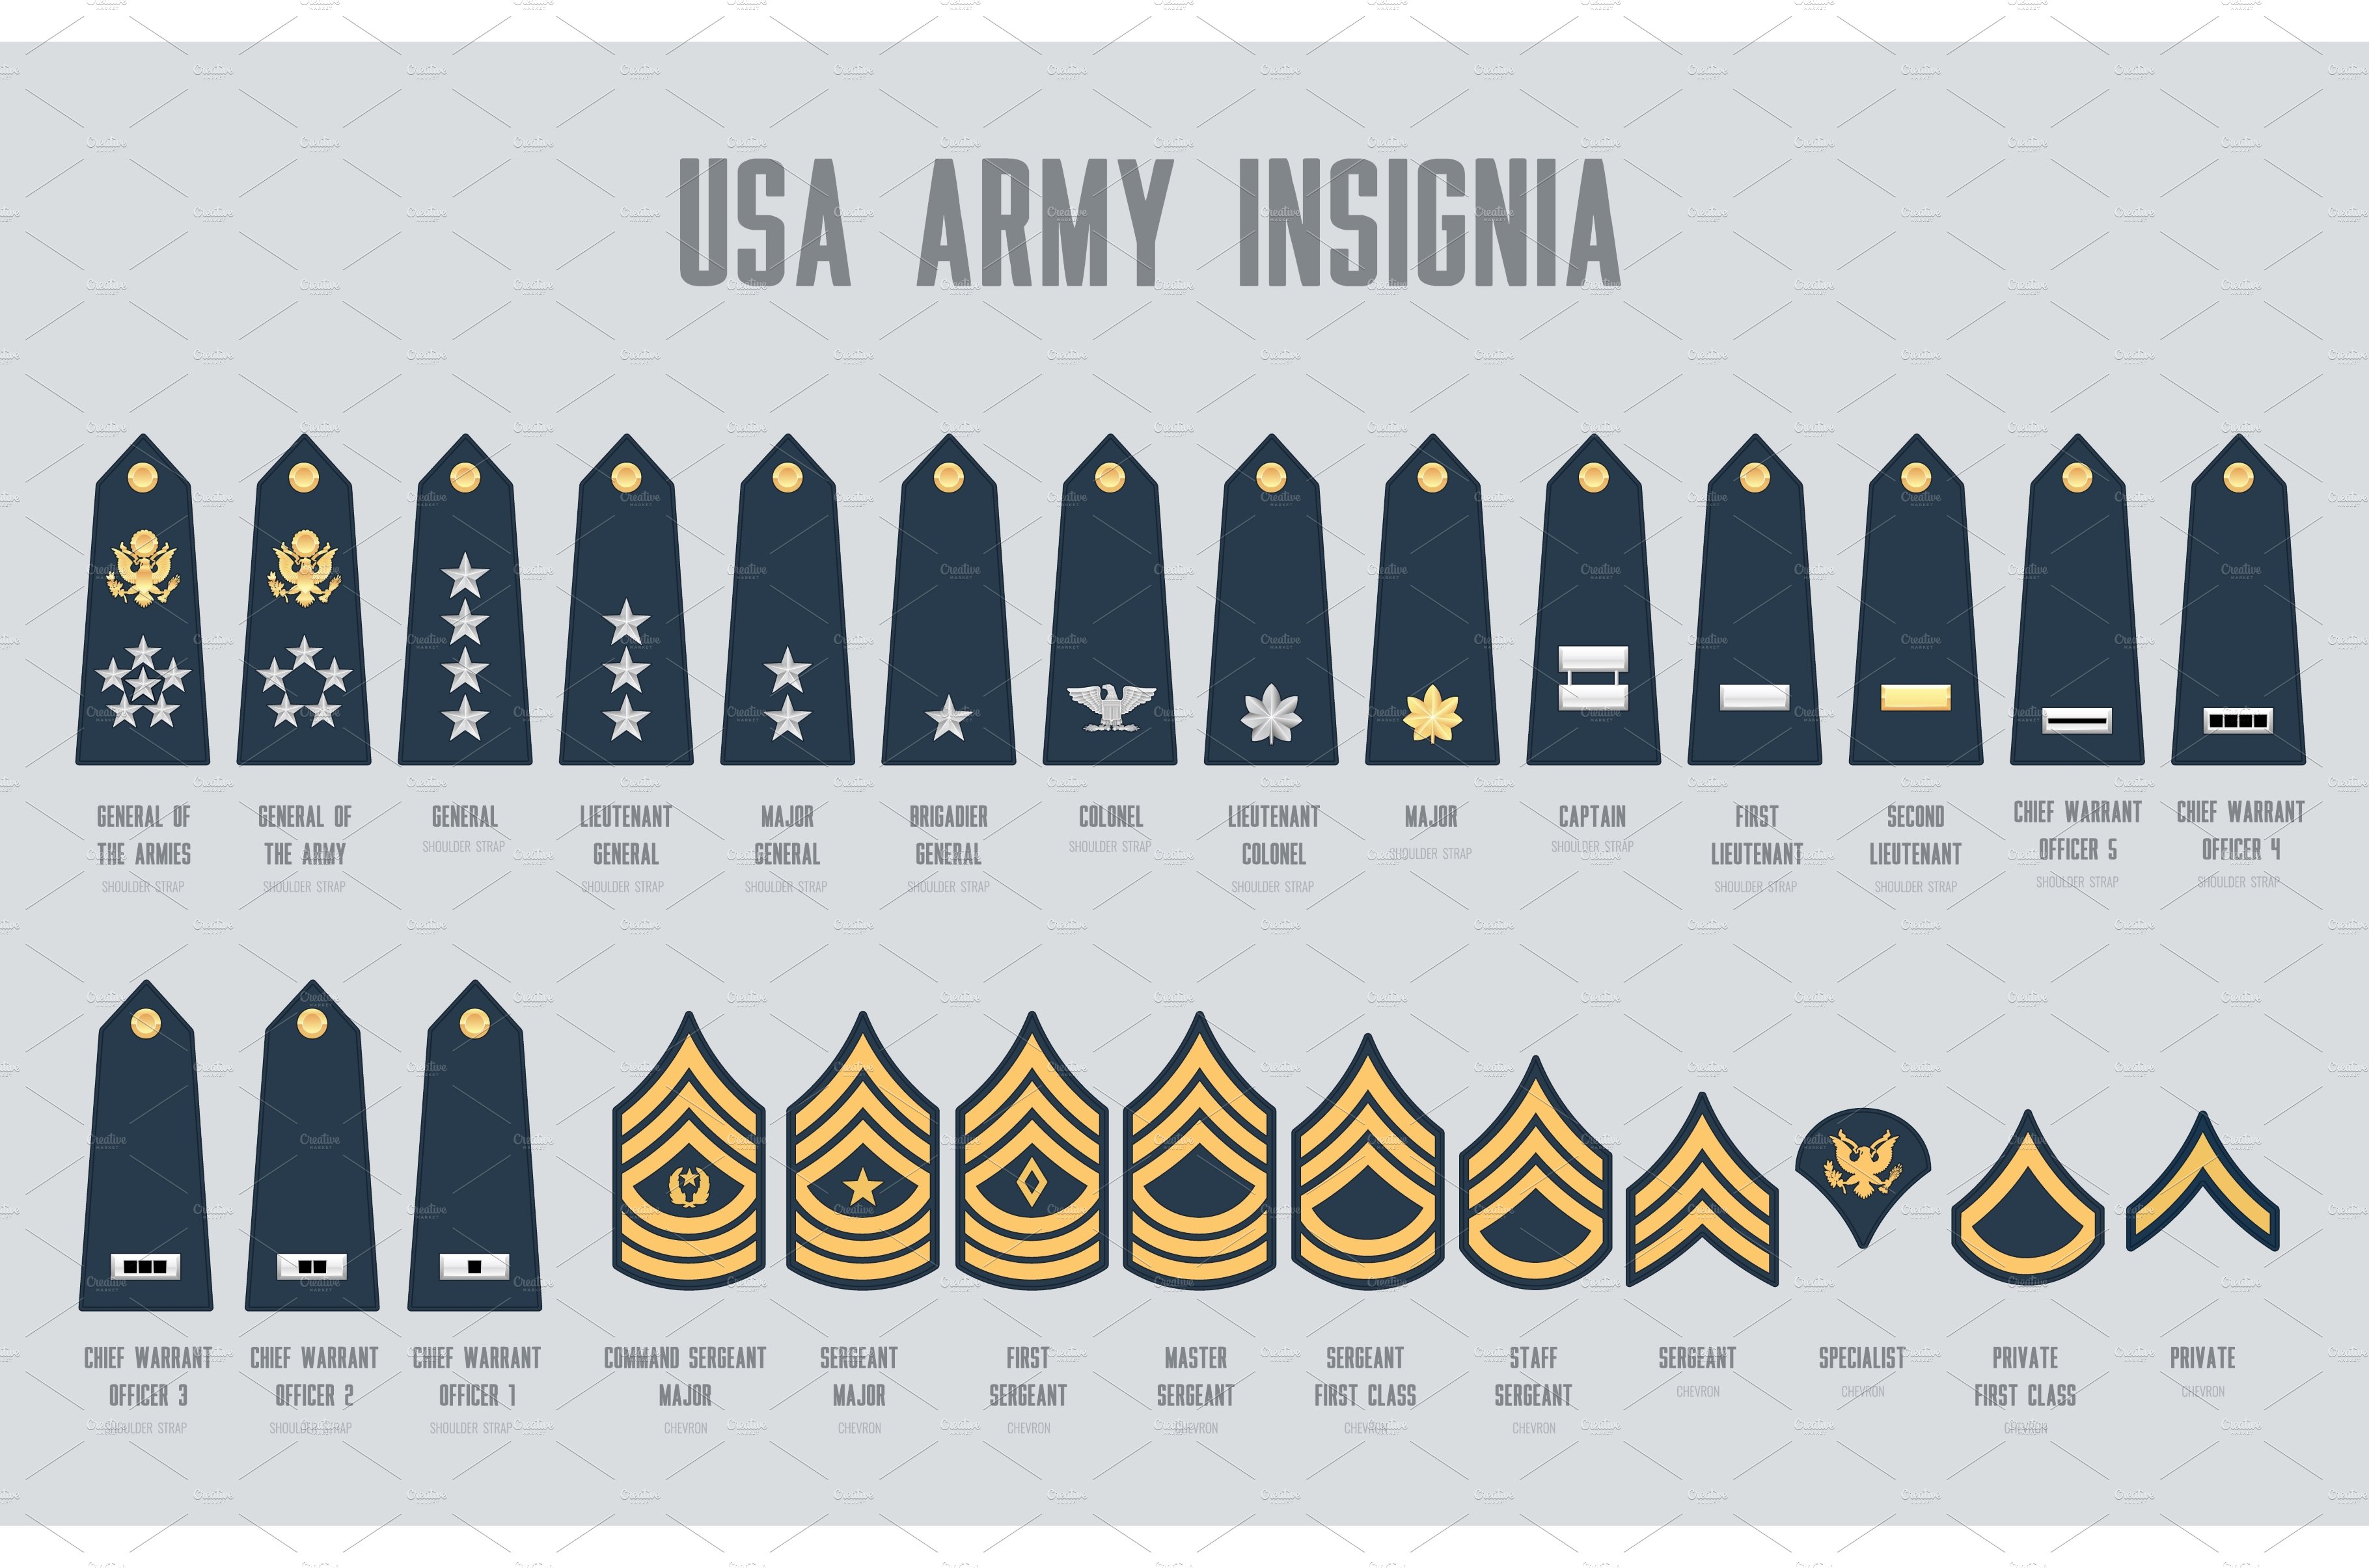 USA army insignia, military chevrons cover image.